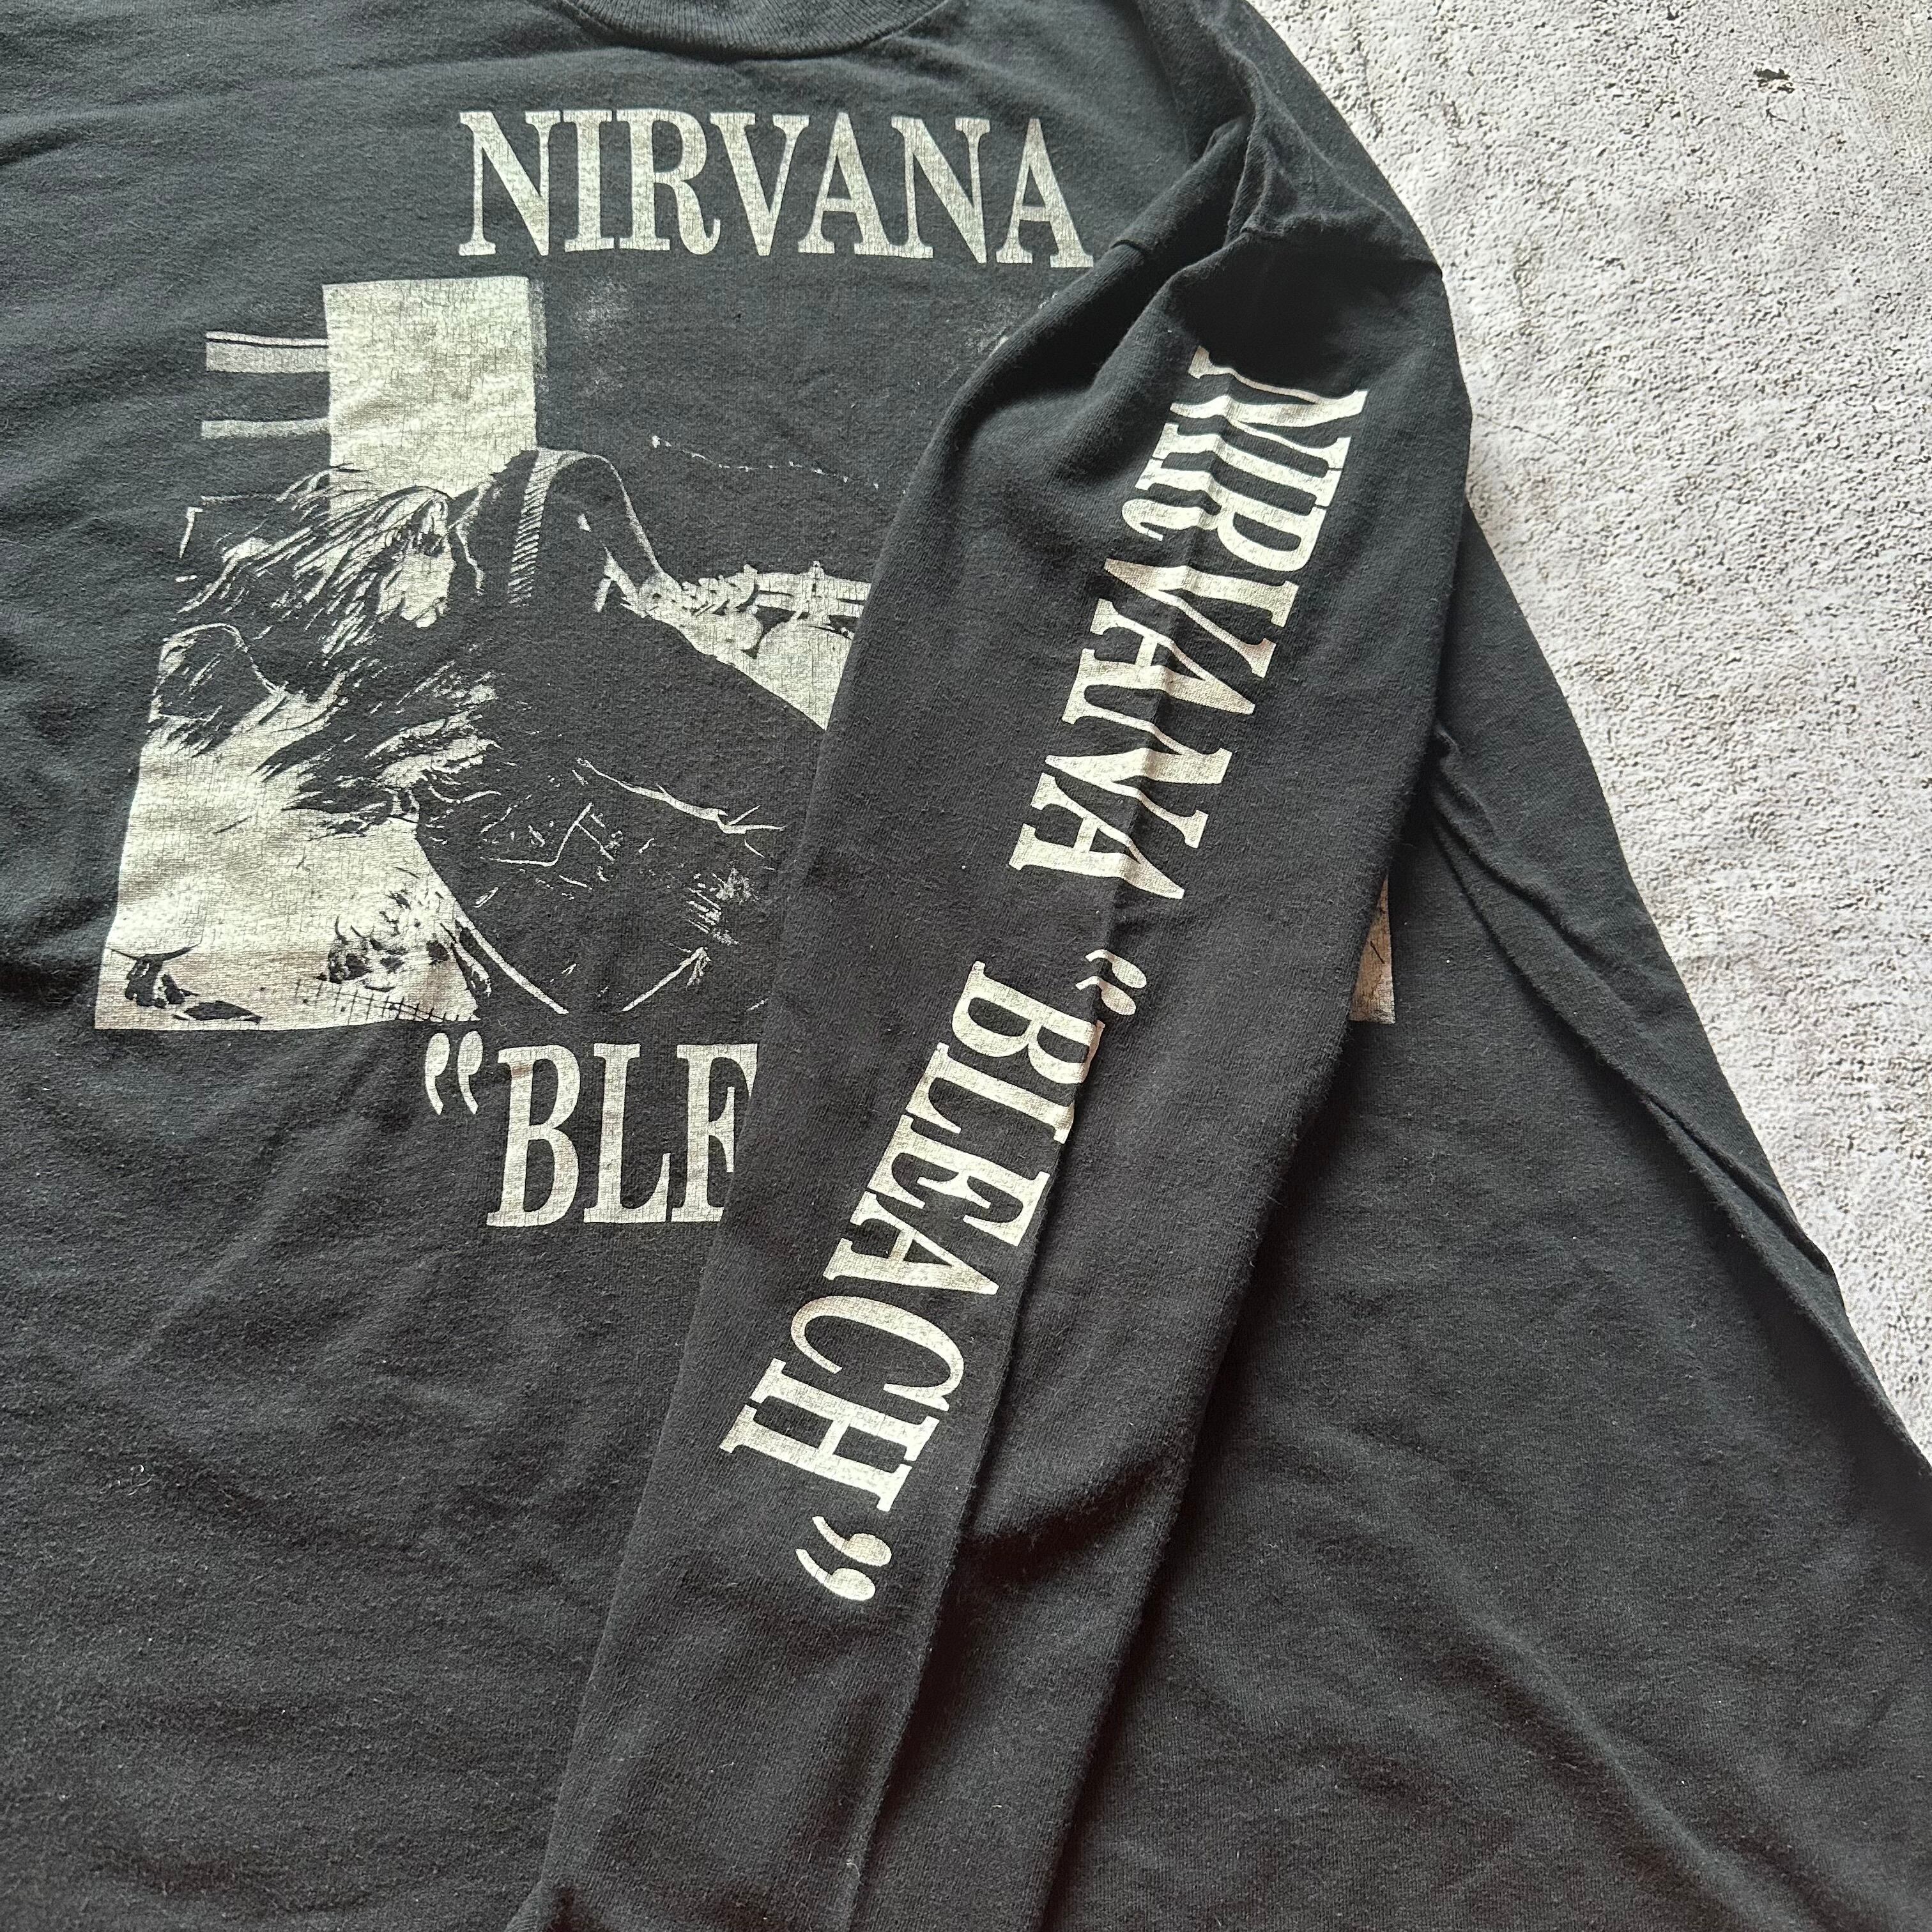 90s nirvana Euro bootleg Tシャツ　ニルヴァーナ